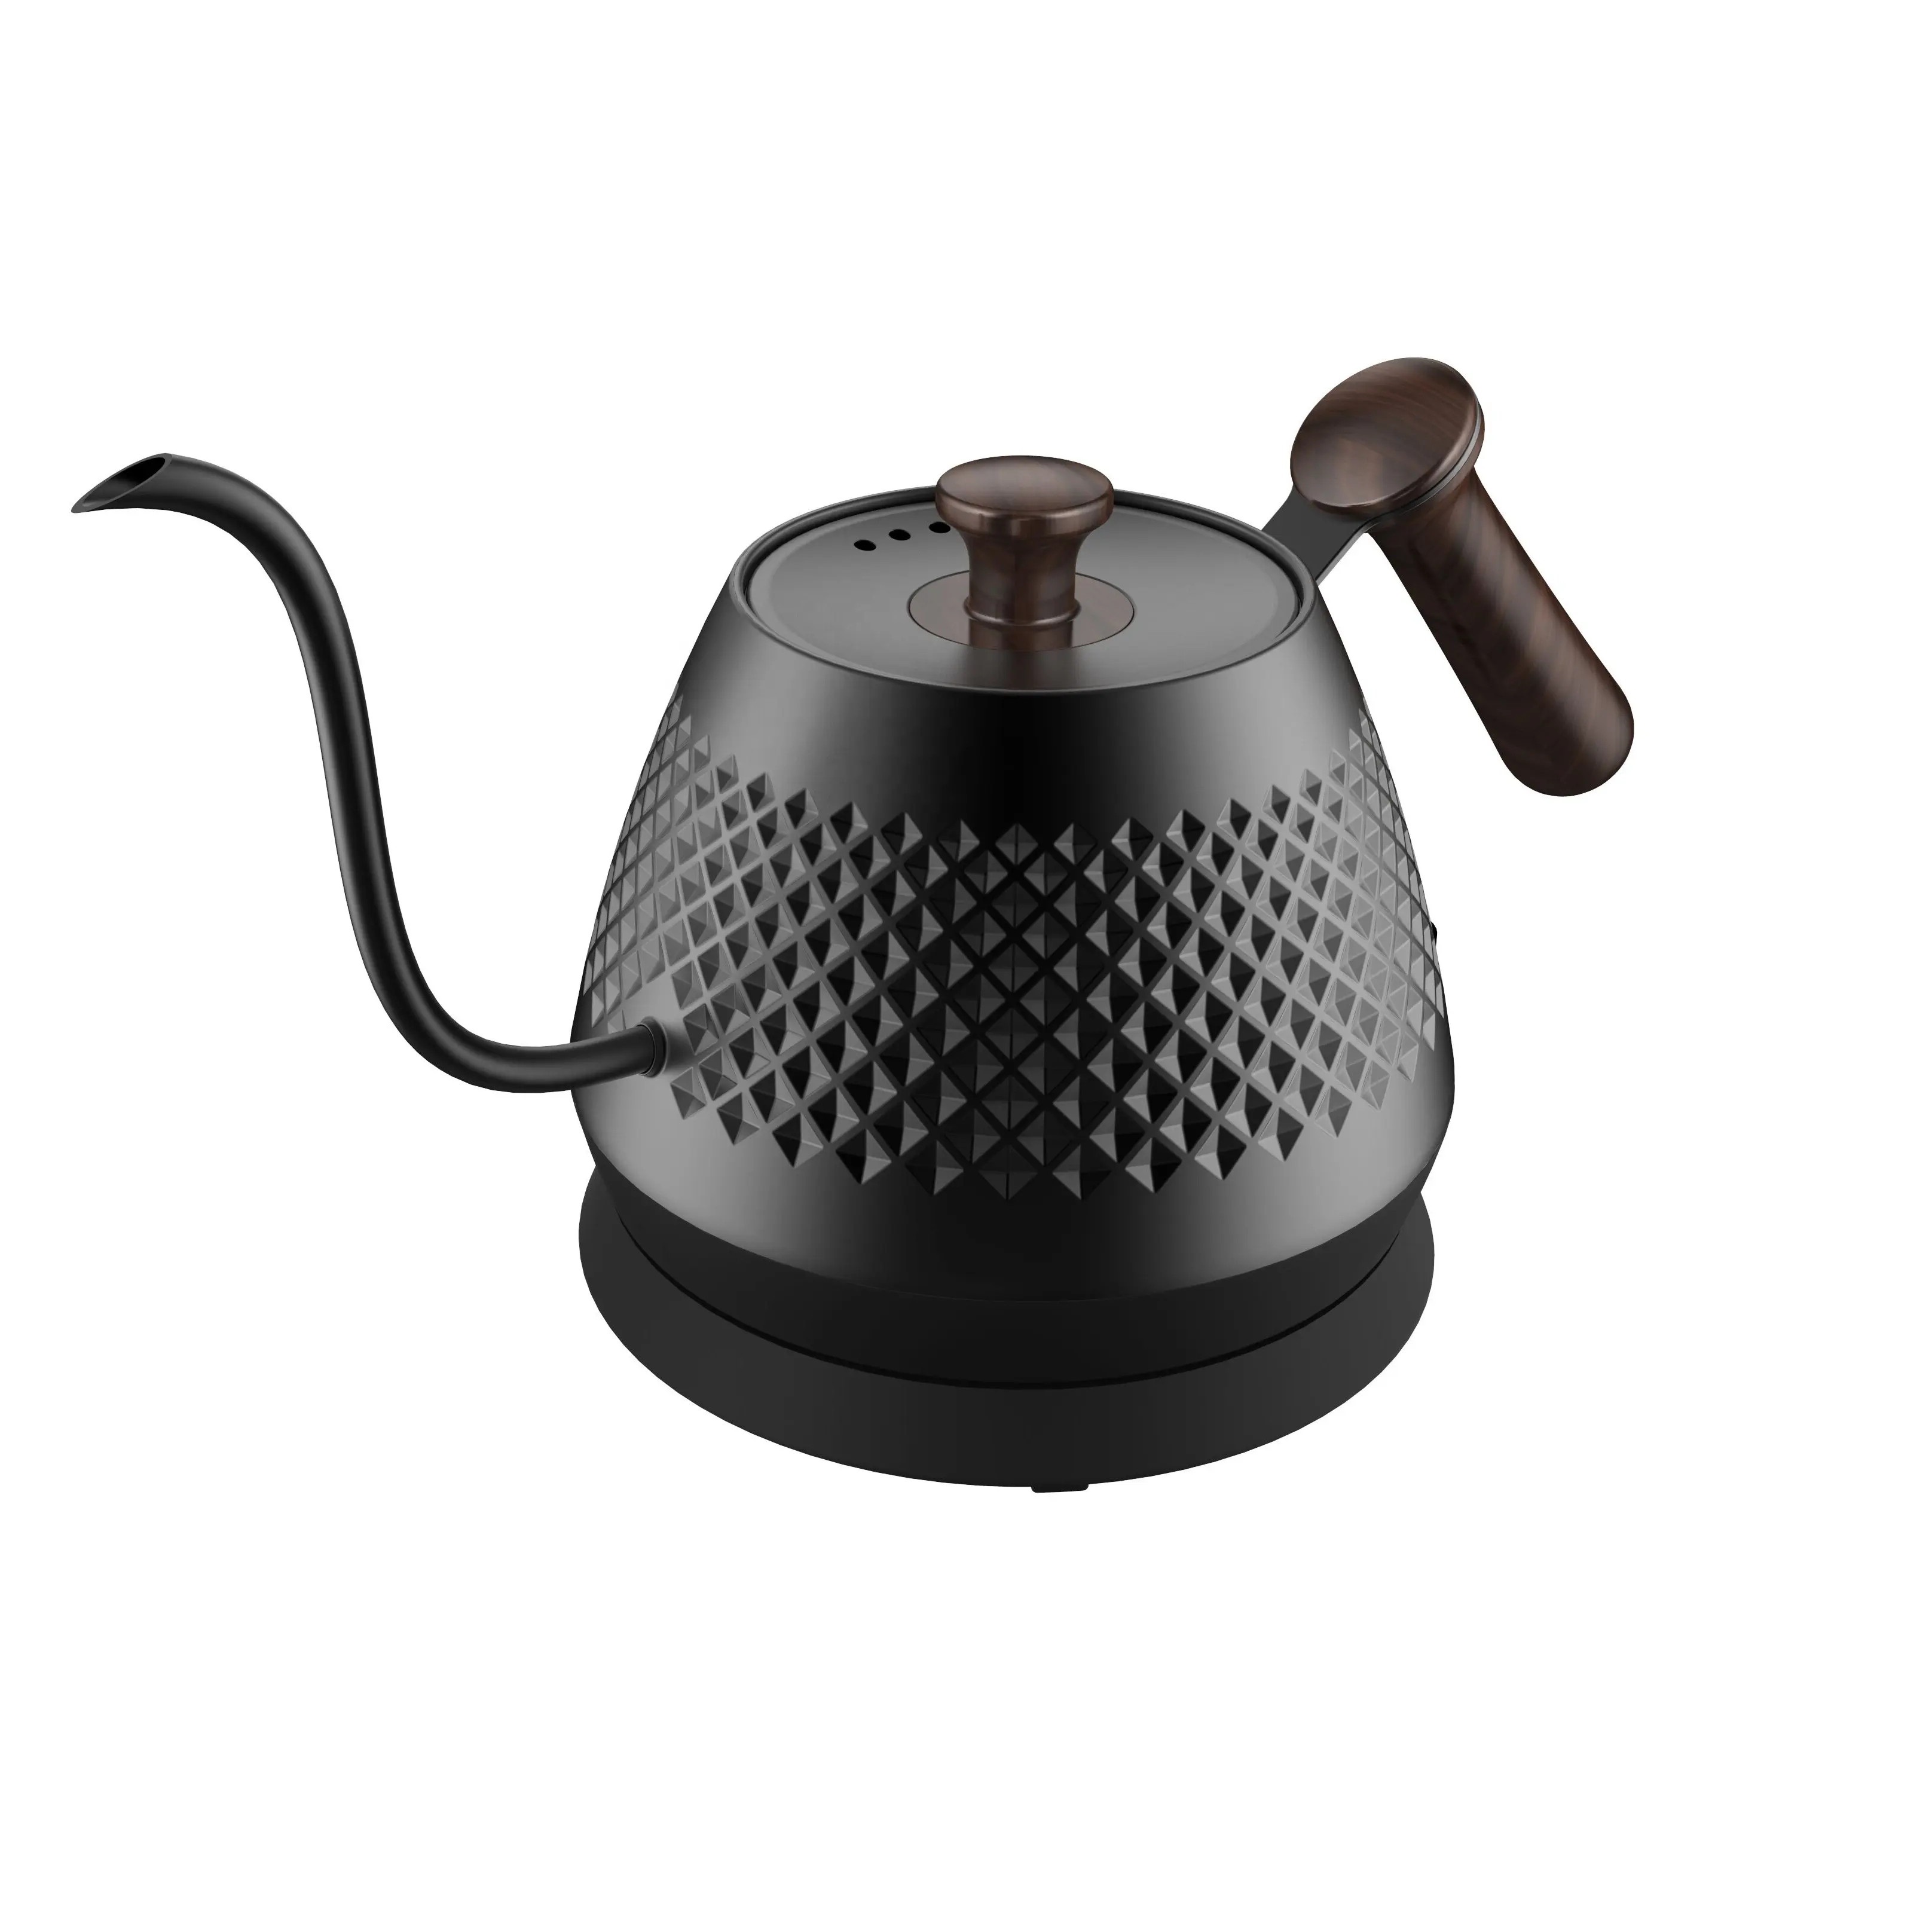 Latest design patent coffee tea hot water kettle with gooseneck spout tea pot and kettle set